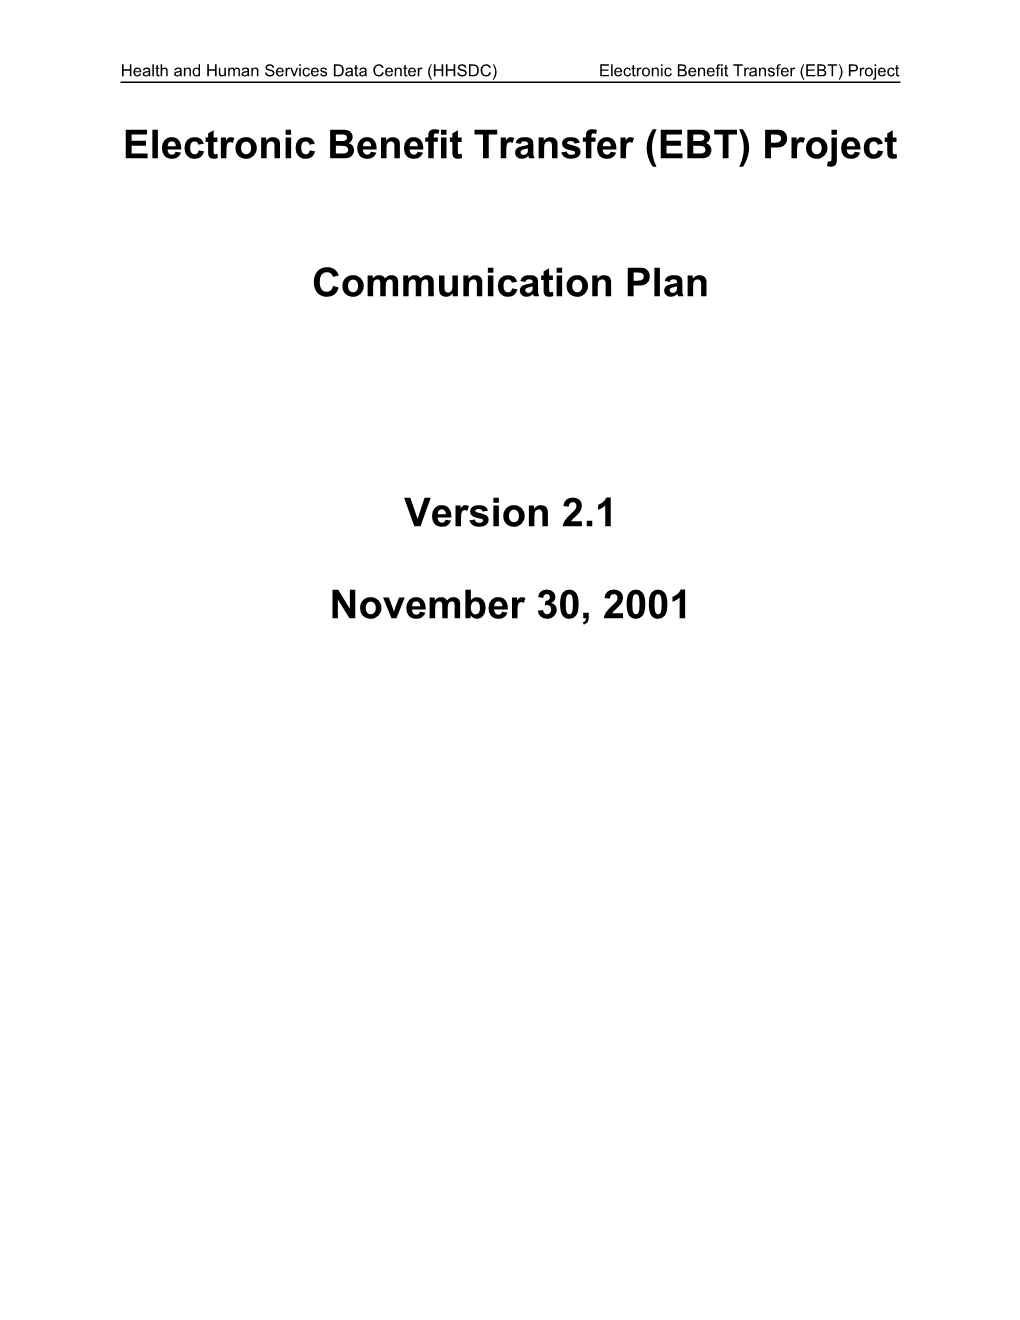 EBT Project Communication Plan